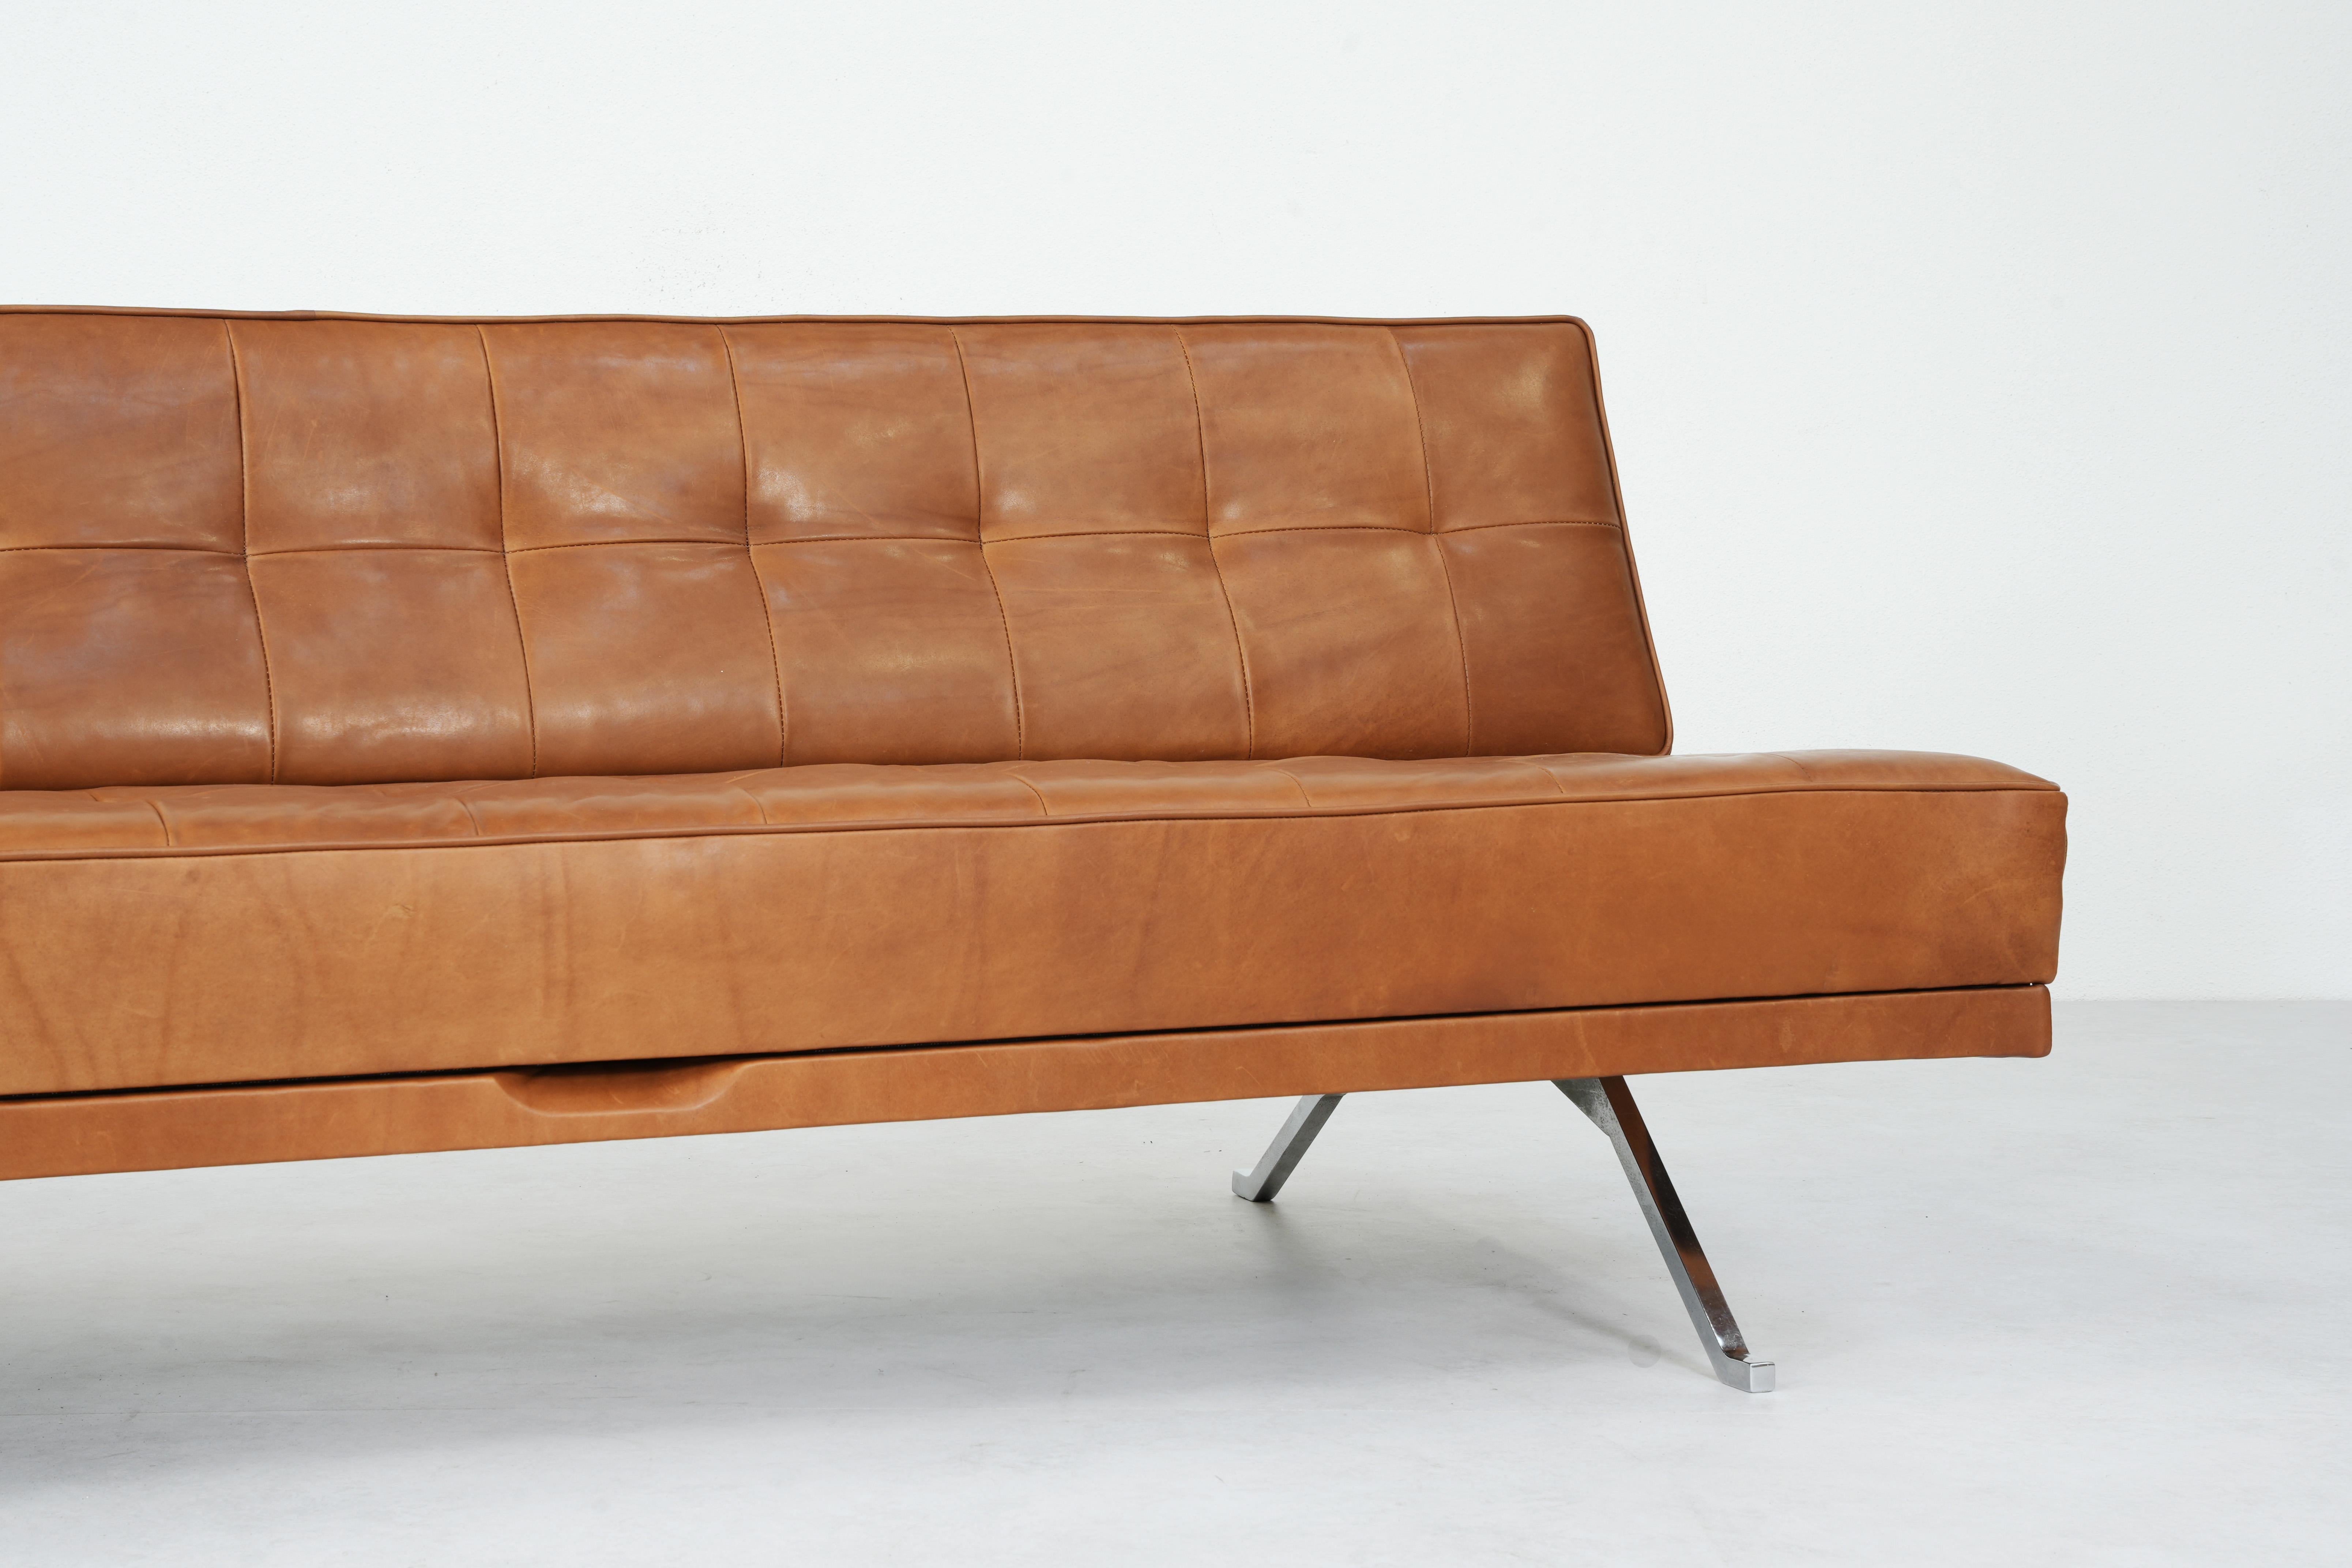 Steel Sofa Daybed Constanze by Johannes Spalt for Wittmann, Austria 1960ies